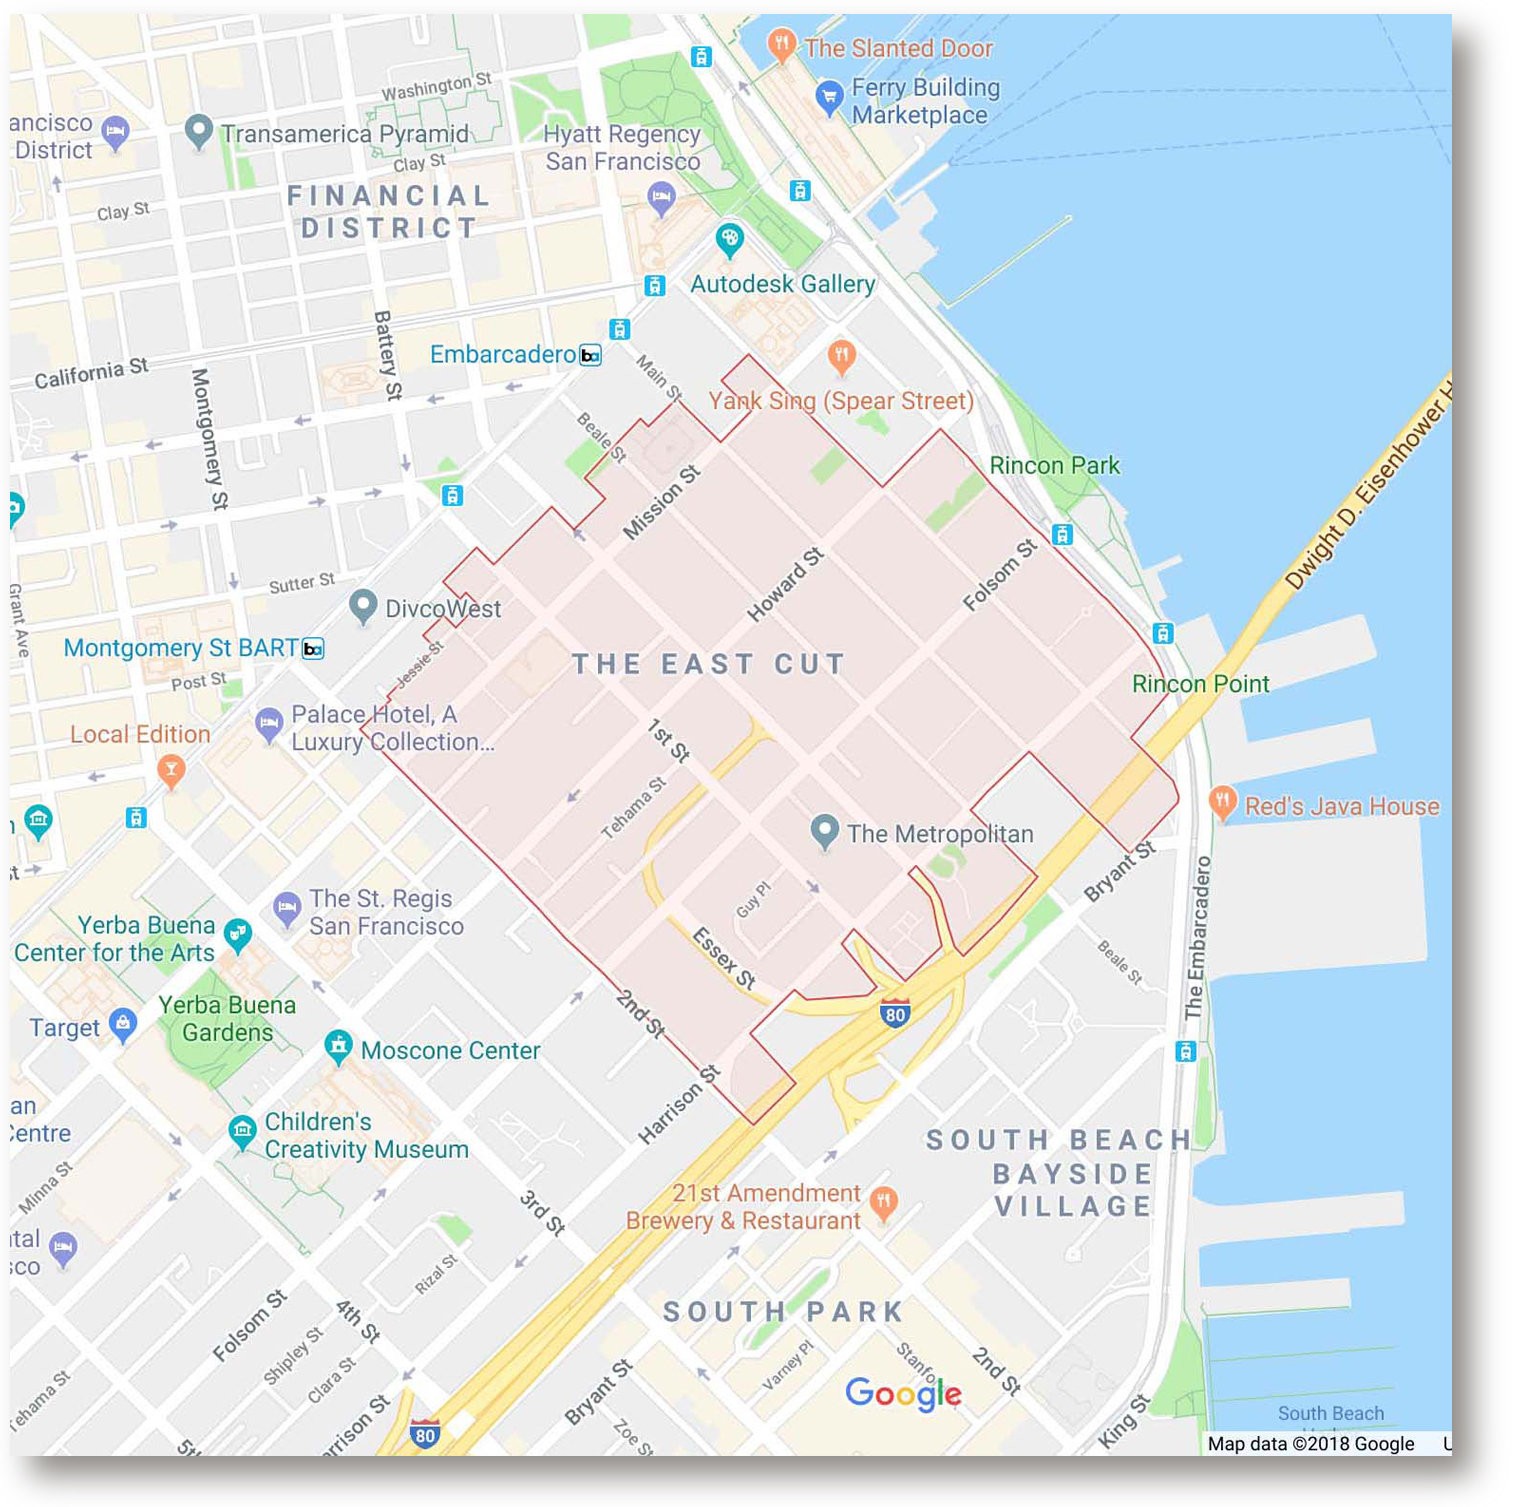 San google. Google Maps 2018. Сан Франциско гугл карта. Главный офис гугл в Сан Франциско карта. San Francisco, Rincon Park Park scheme.